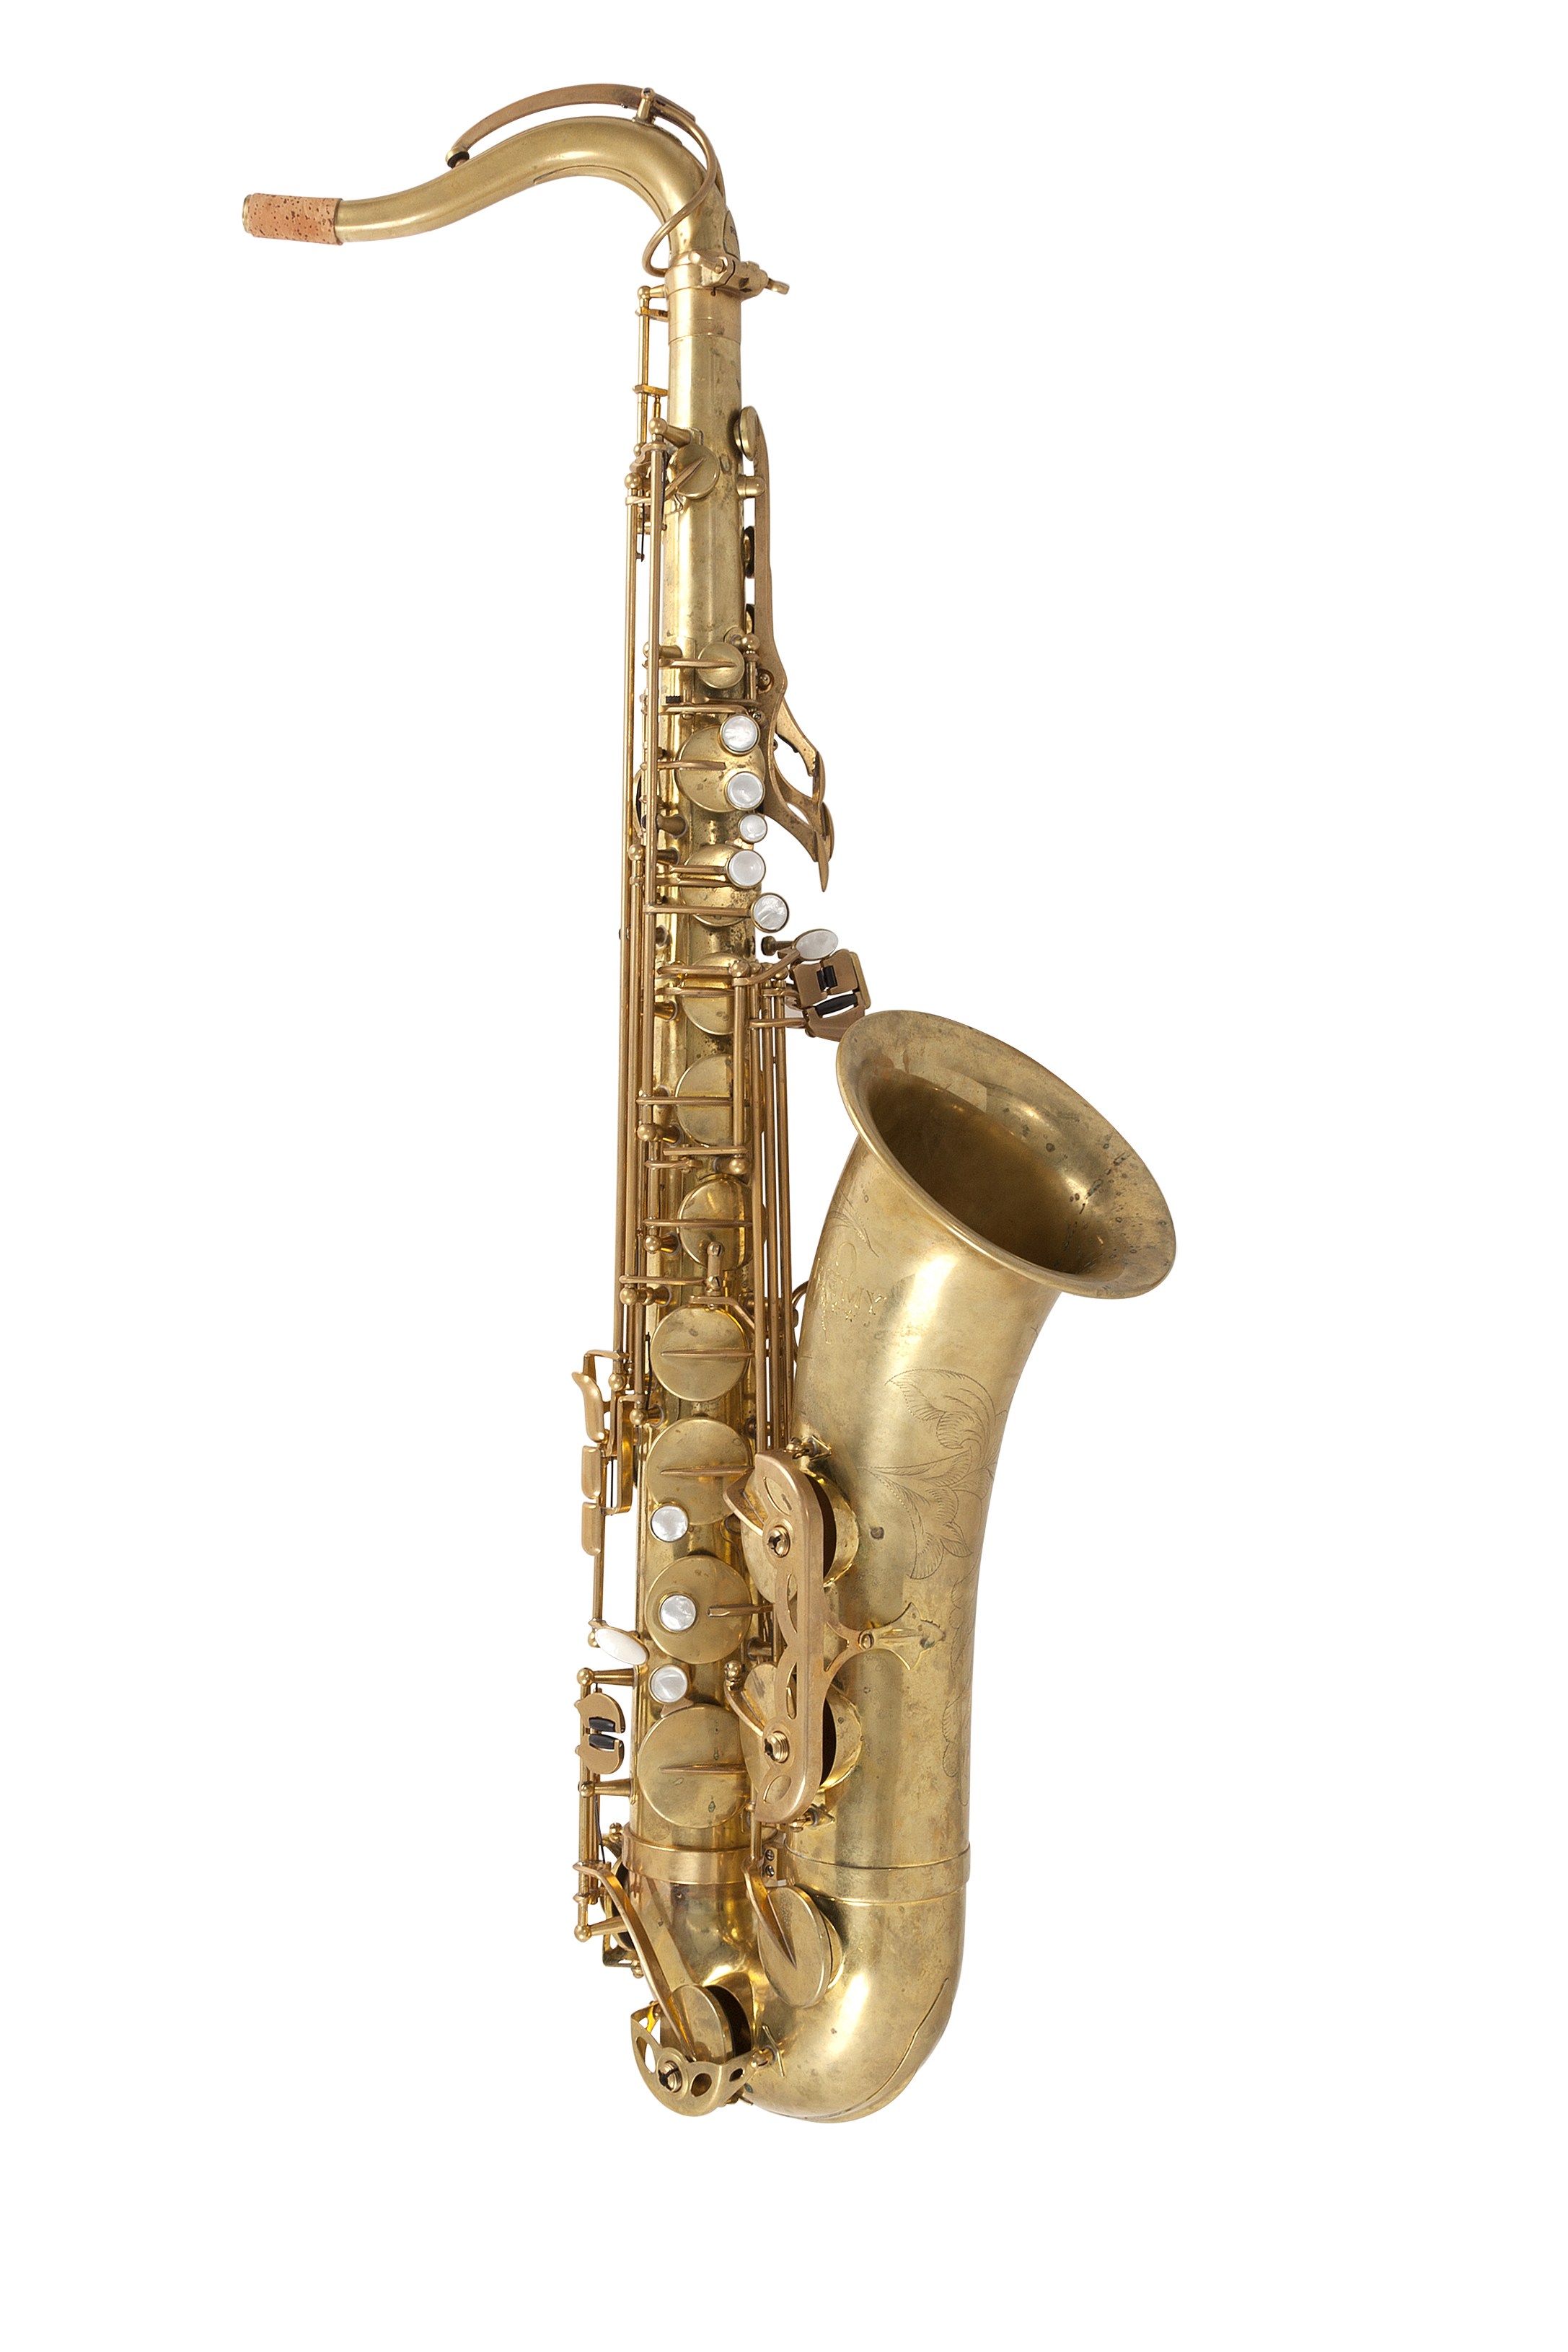 Remy tenor saxophone – Remy Saxophones